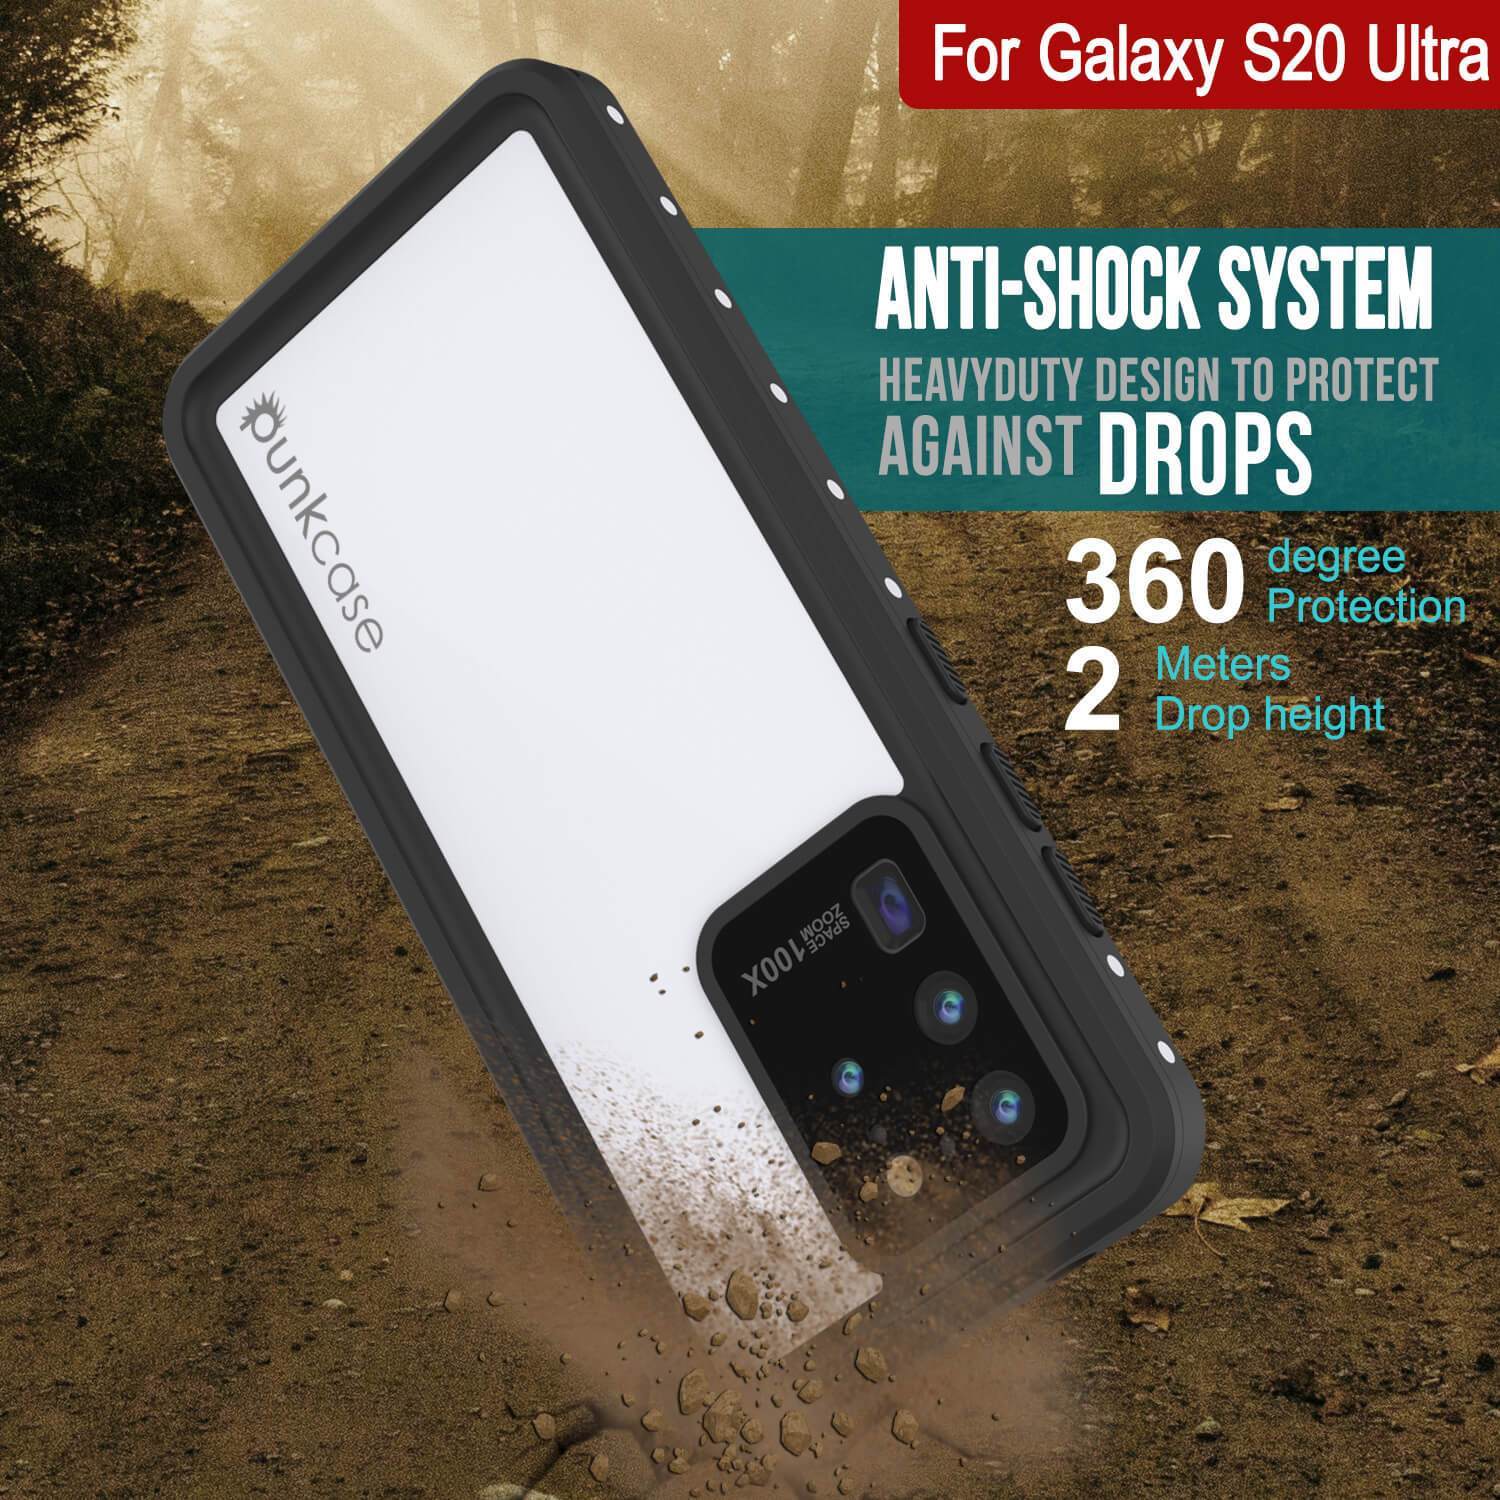 Galaxy S20 Ultra Waterproof Case, Punkcase StudStar White Thin 6.6ft Underwater IP68 Shock/Snow Proof